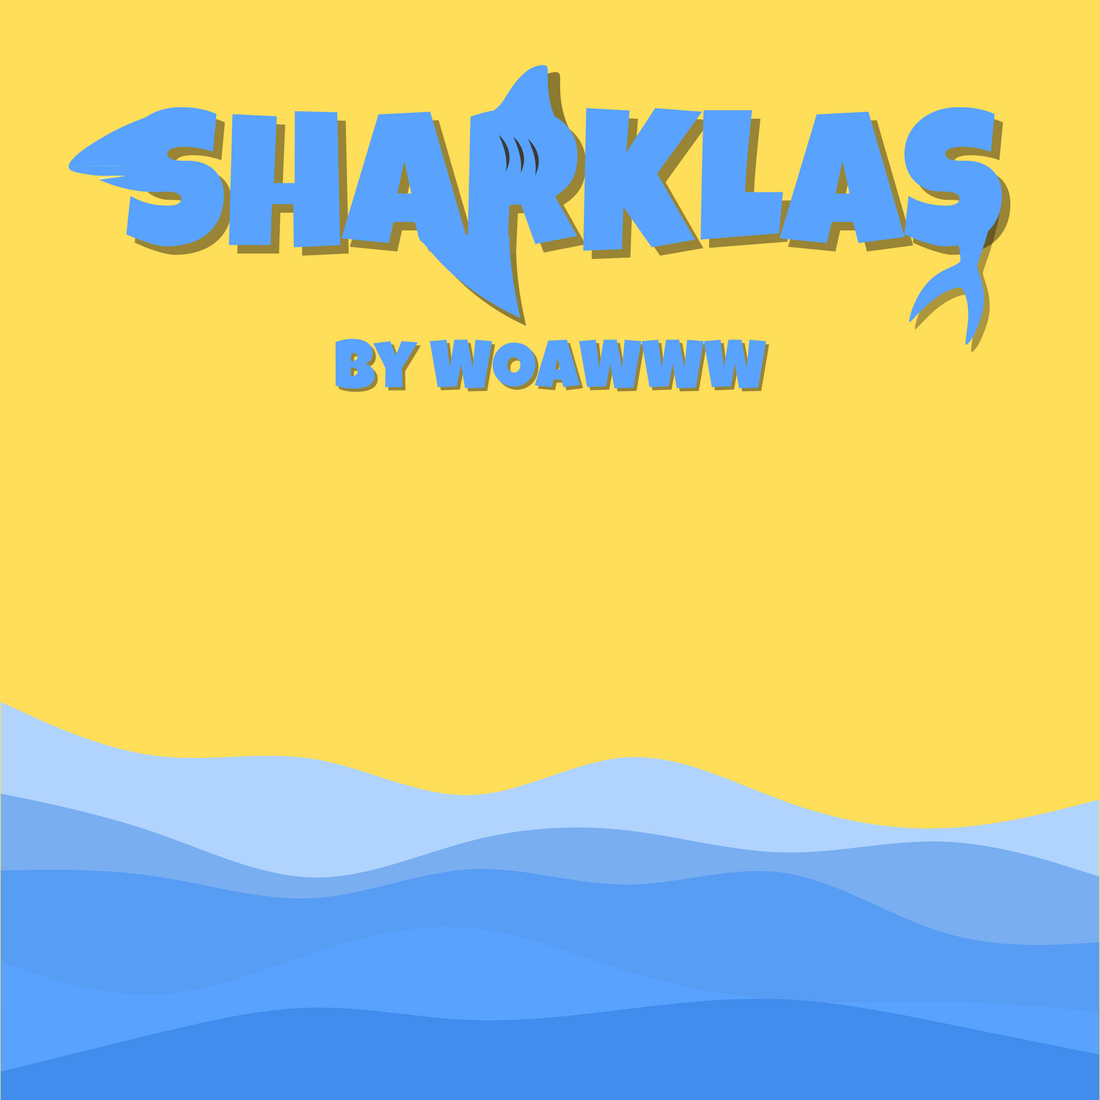 sharklas original WOAWWW